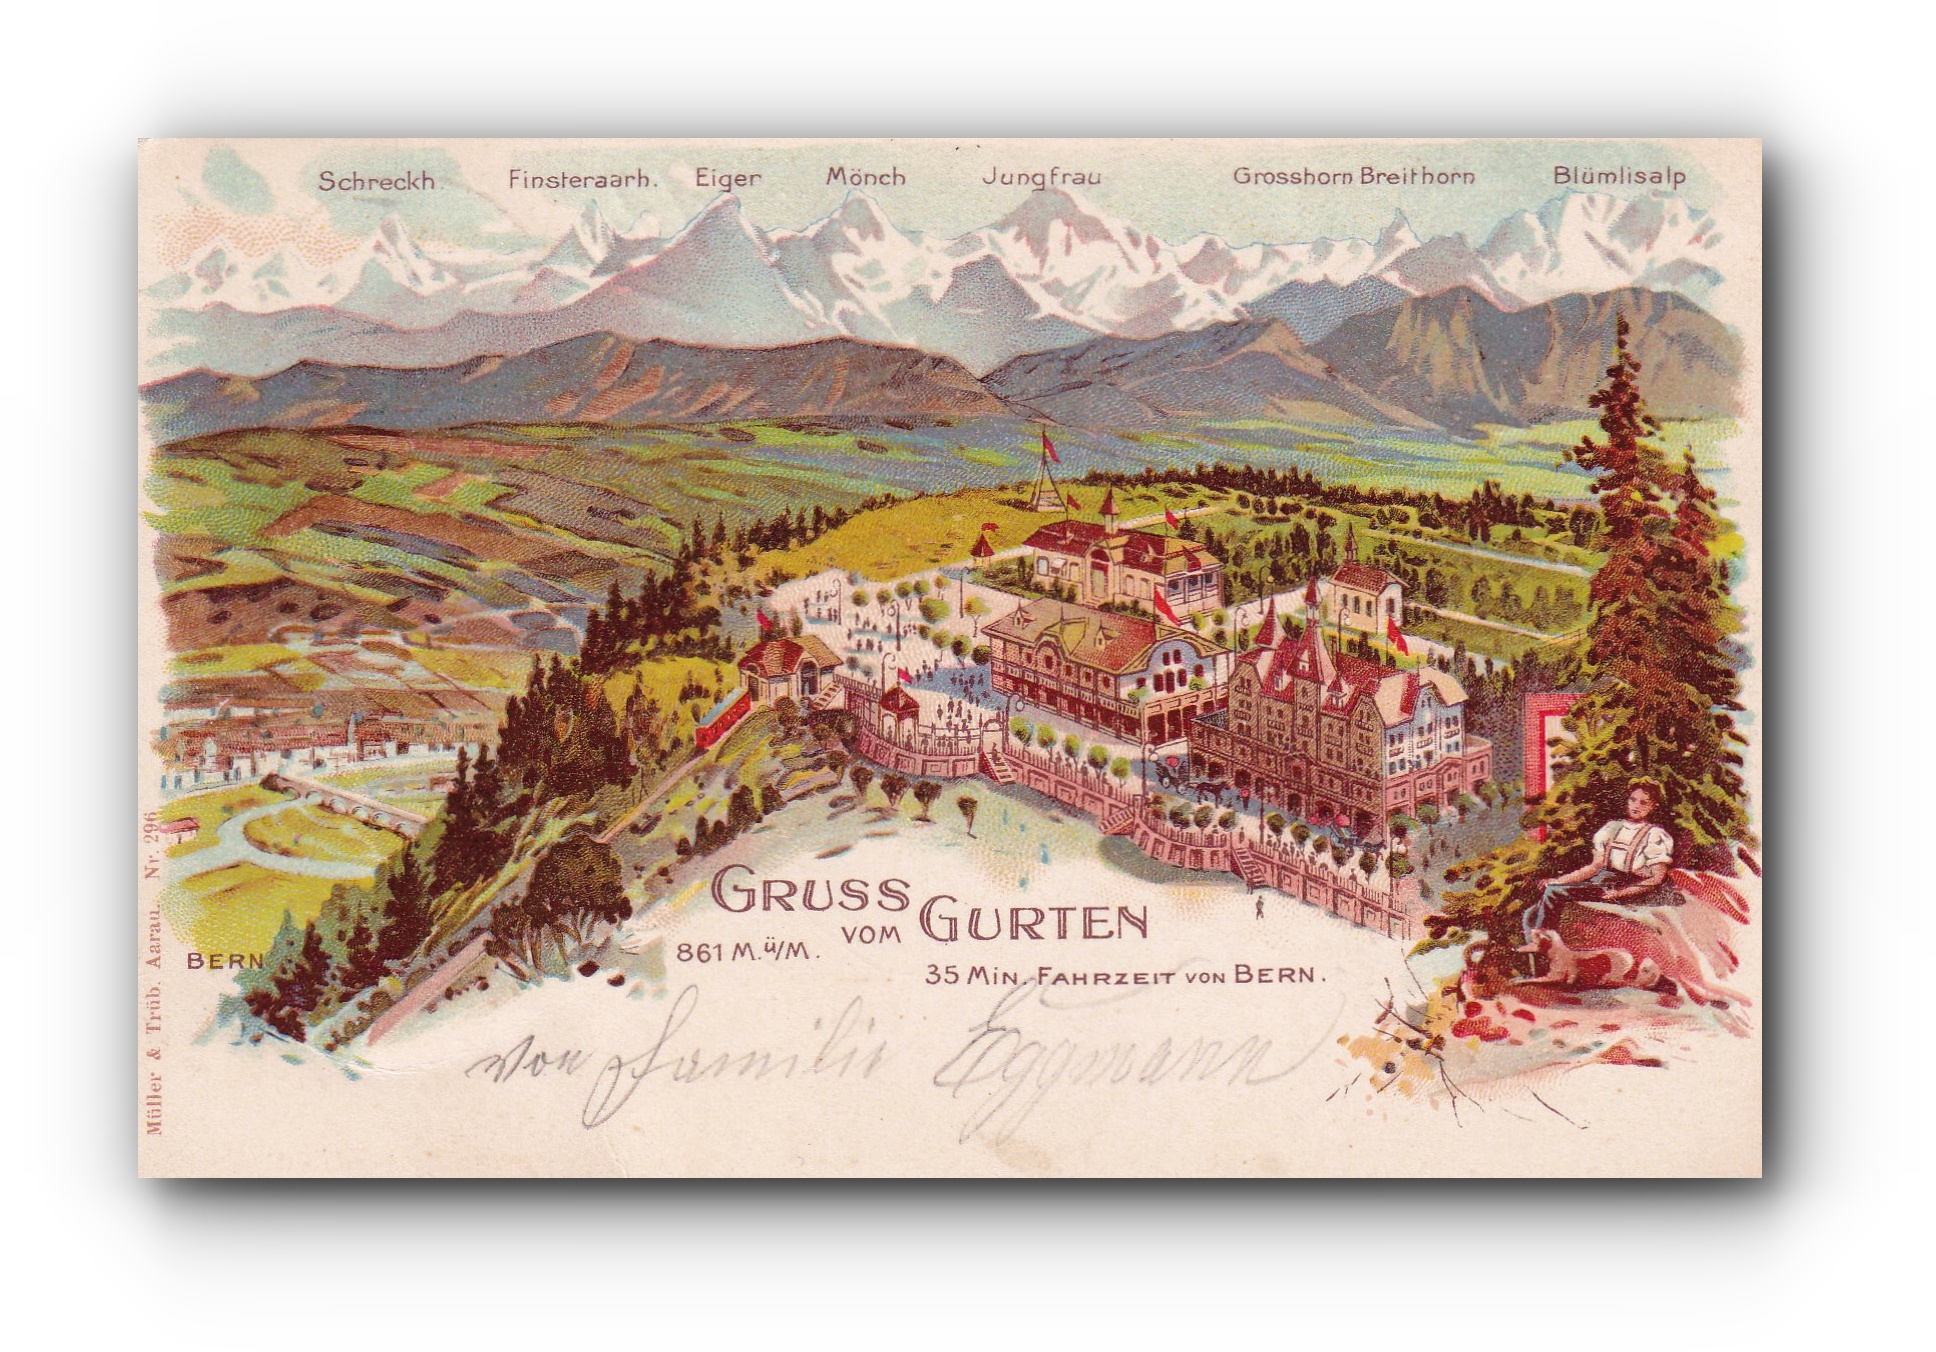 Gruss vom Gurten - 10.09.1900 - Salutations depuis le Gurten - Greetings from the Gurten